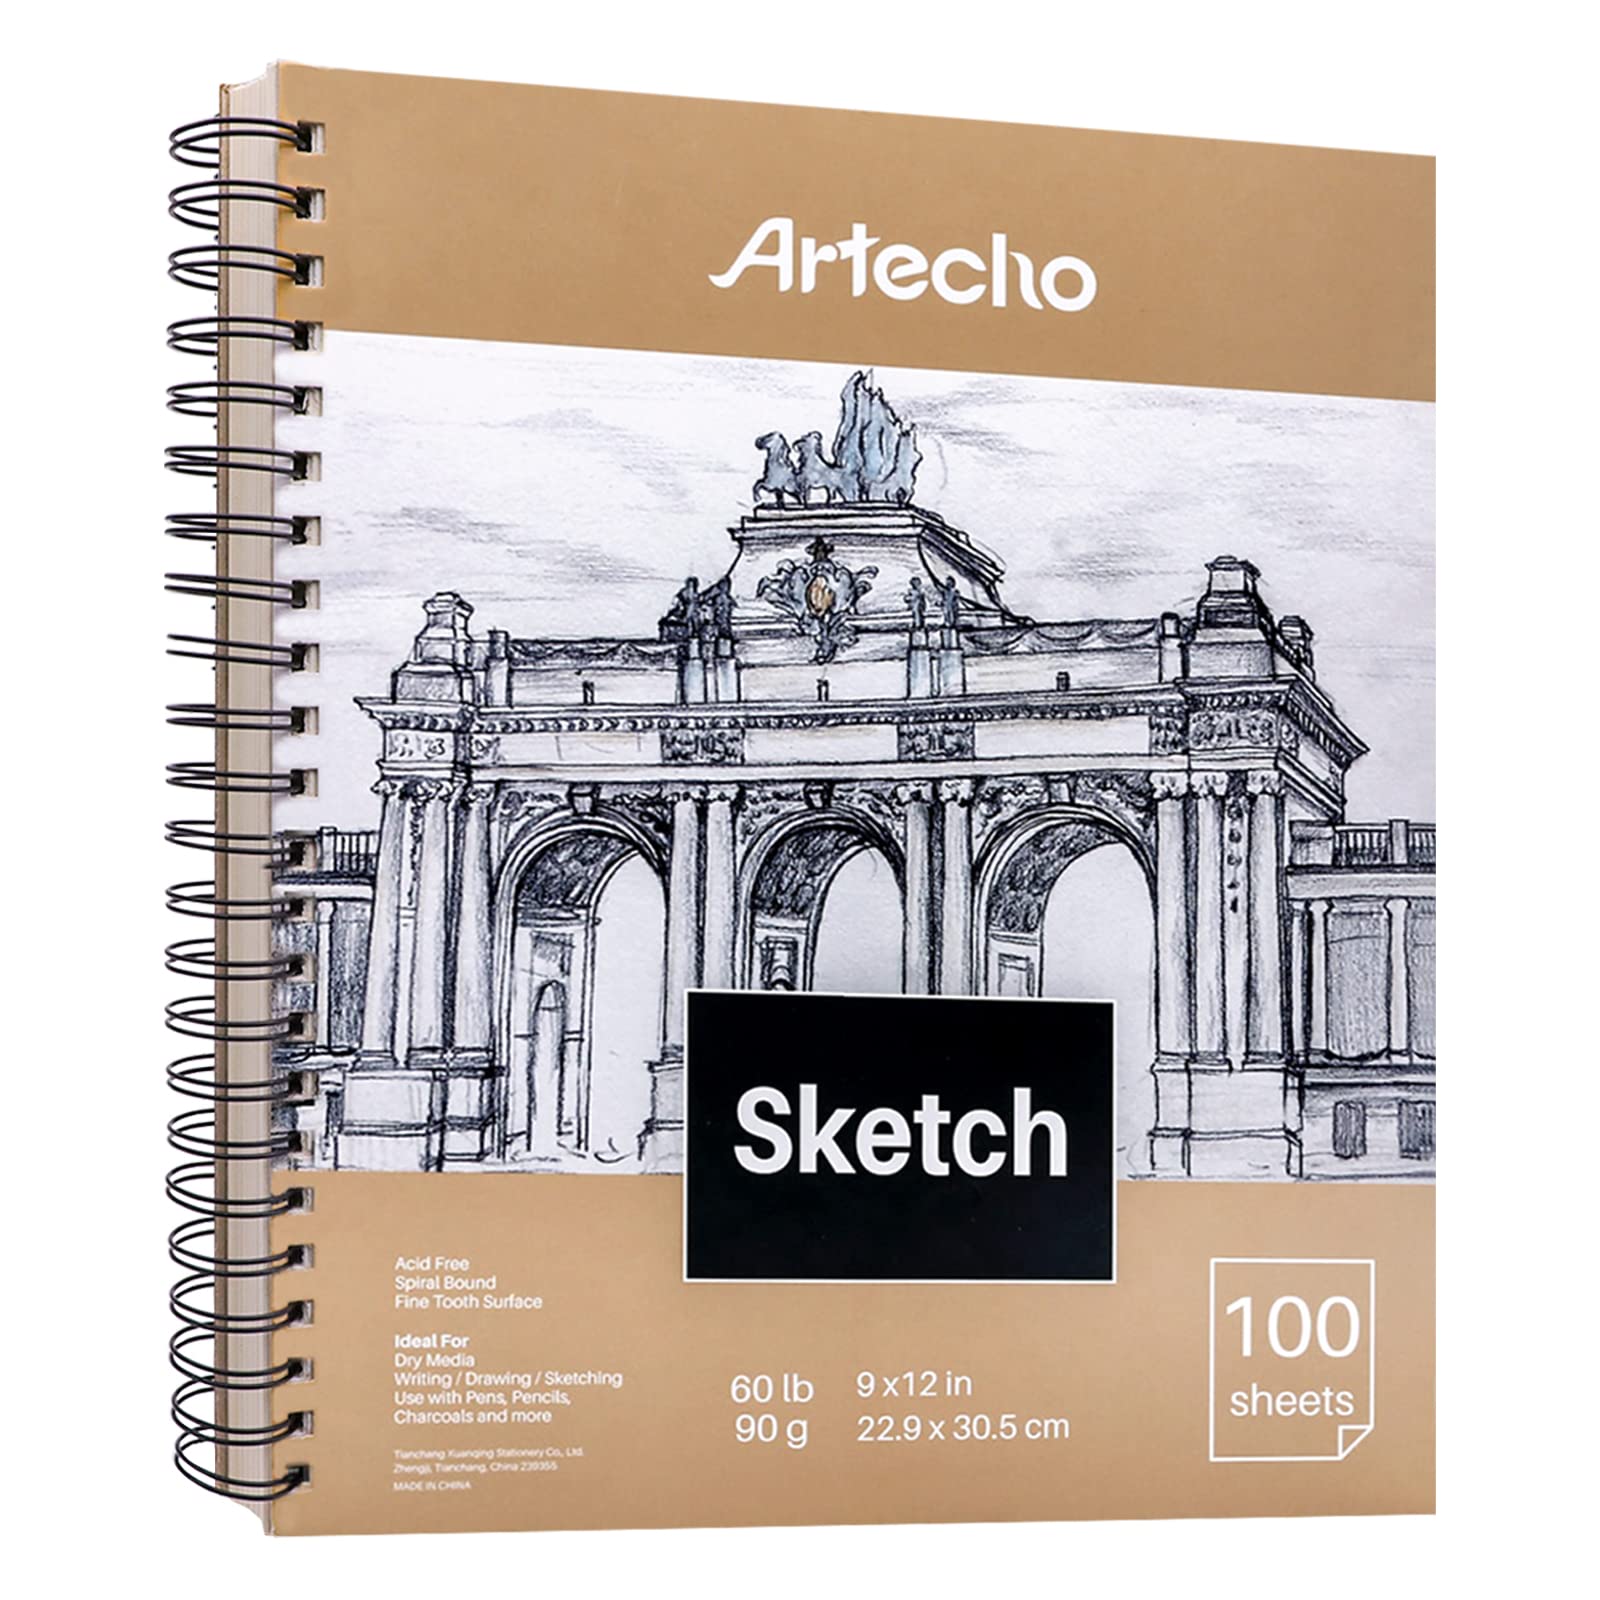 Artecho 9 x 12 Inch Sketch Book, 100 Sheets (60 lb/90gsm), Spiral